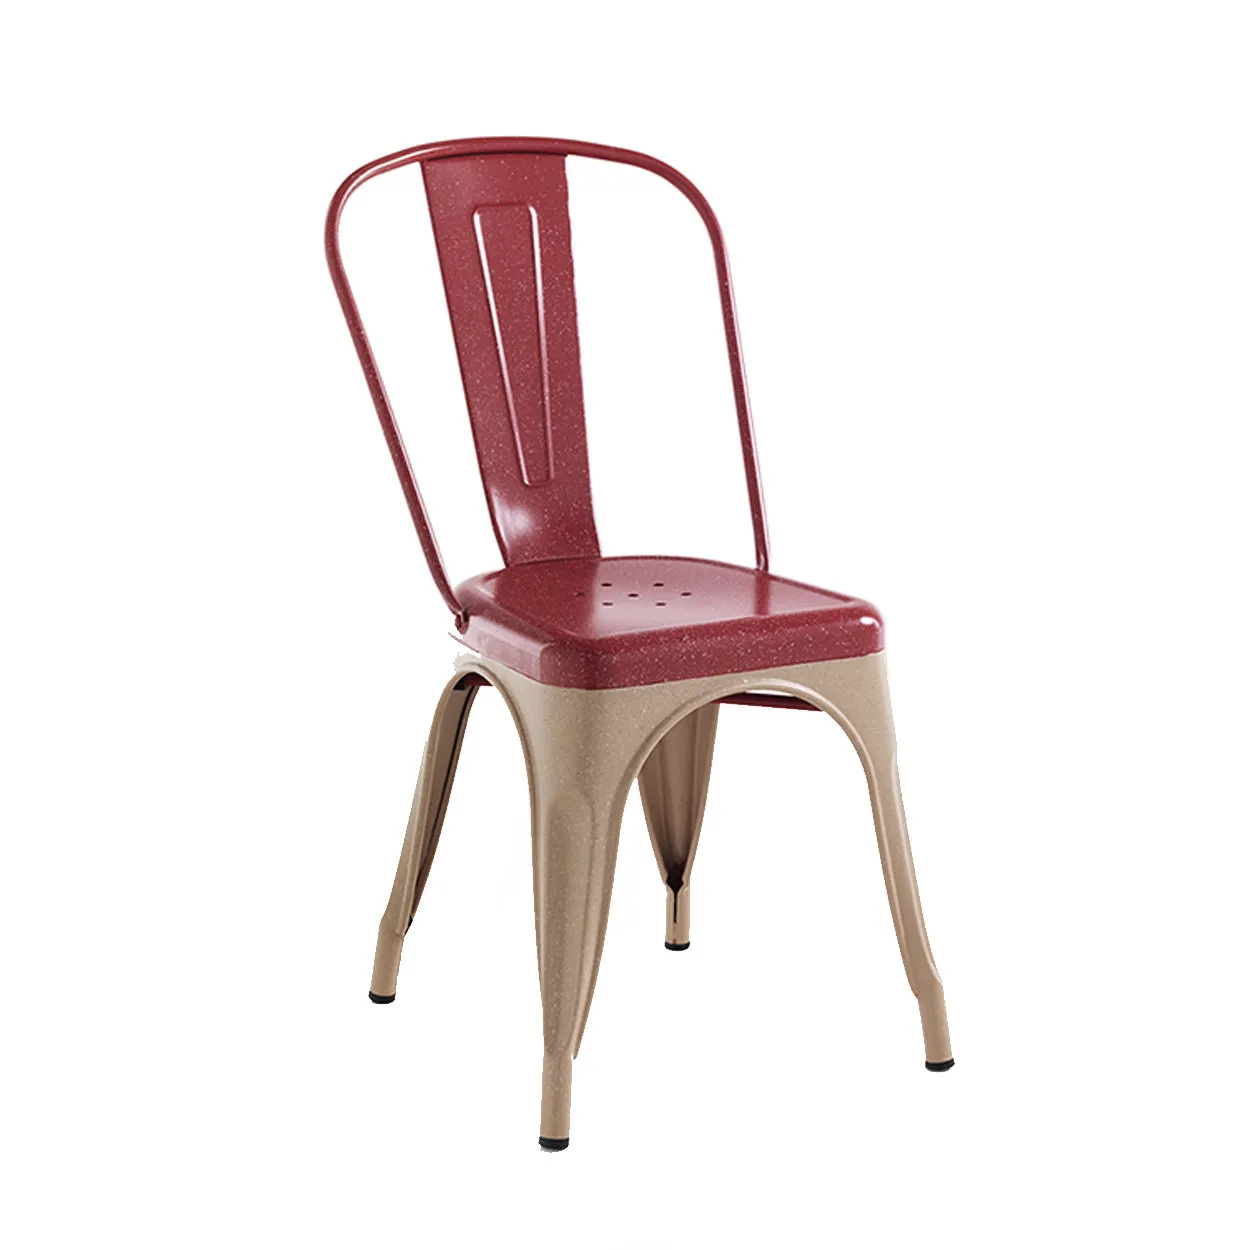 Set da 4 Bicolor - sedia in metallo rossa